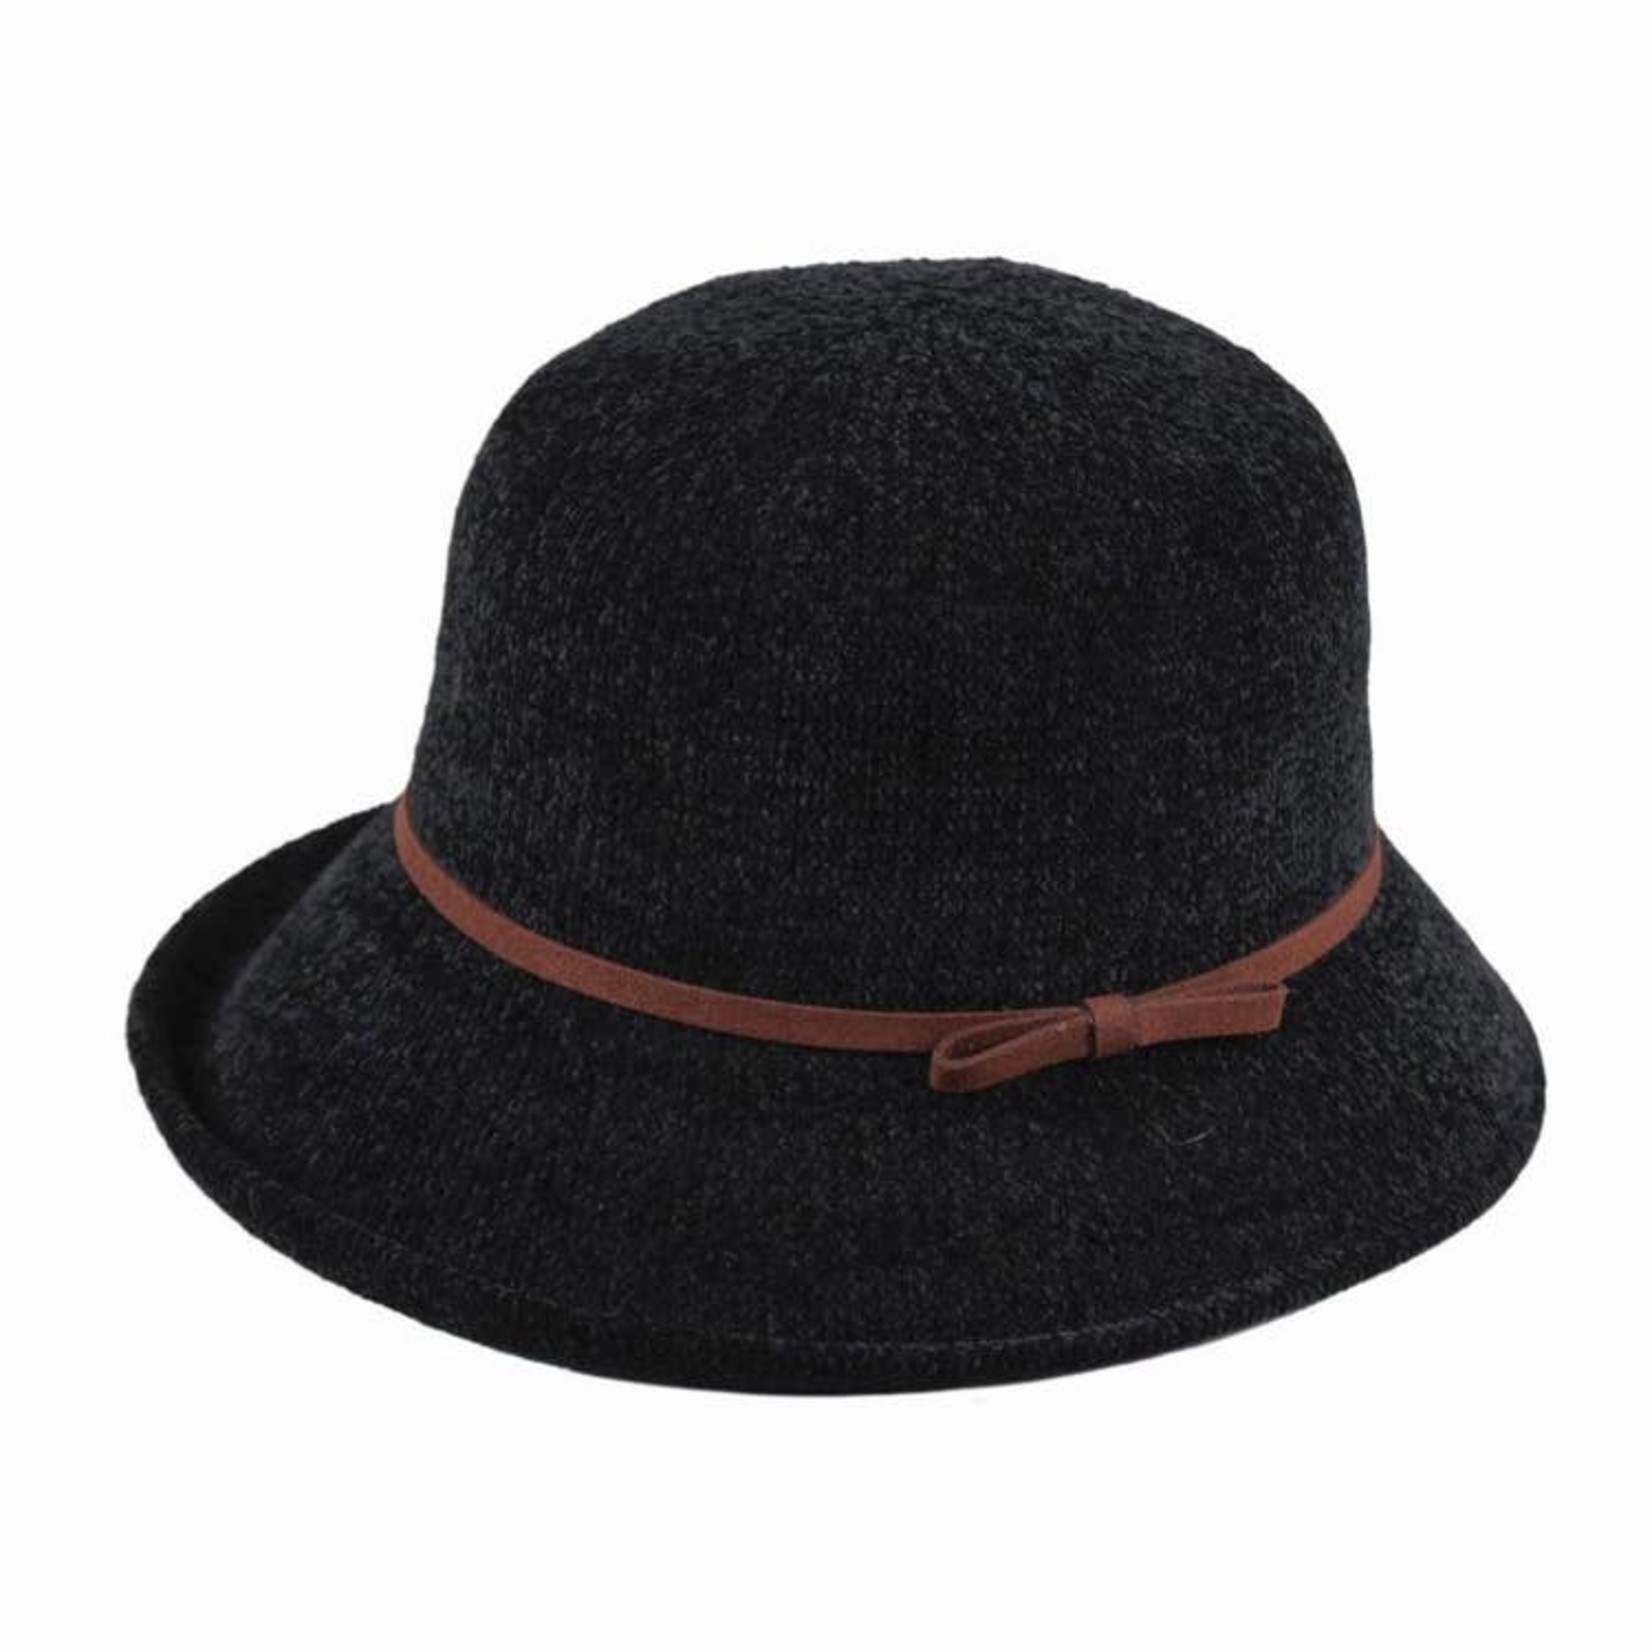 Jeanne Simmons 100% Chenille Cloche Hat w/ Leather Trim - Black